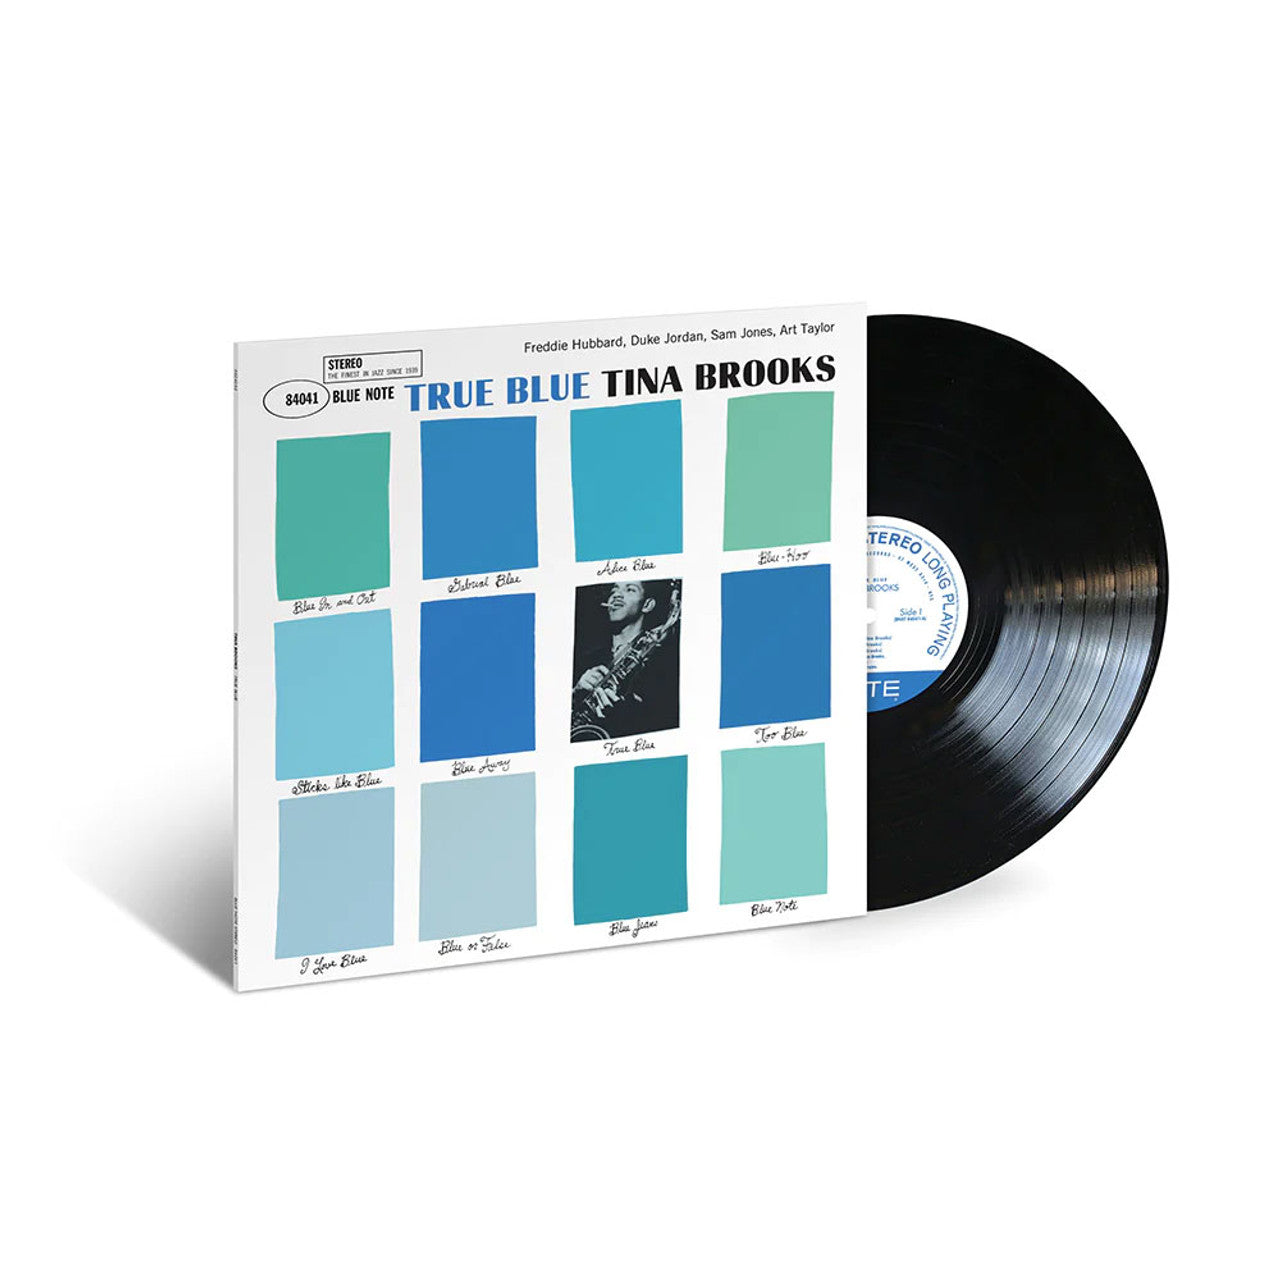 Tina Brooks - True Blue LP (Blue Note Classic Vinyl Series)